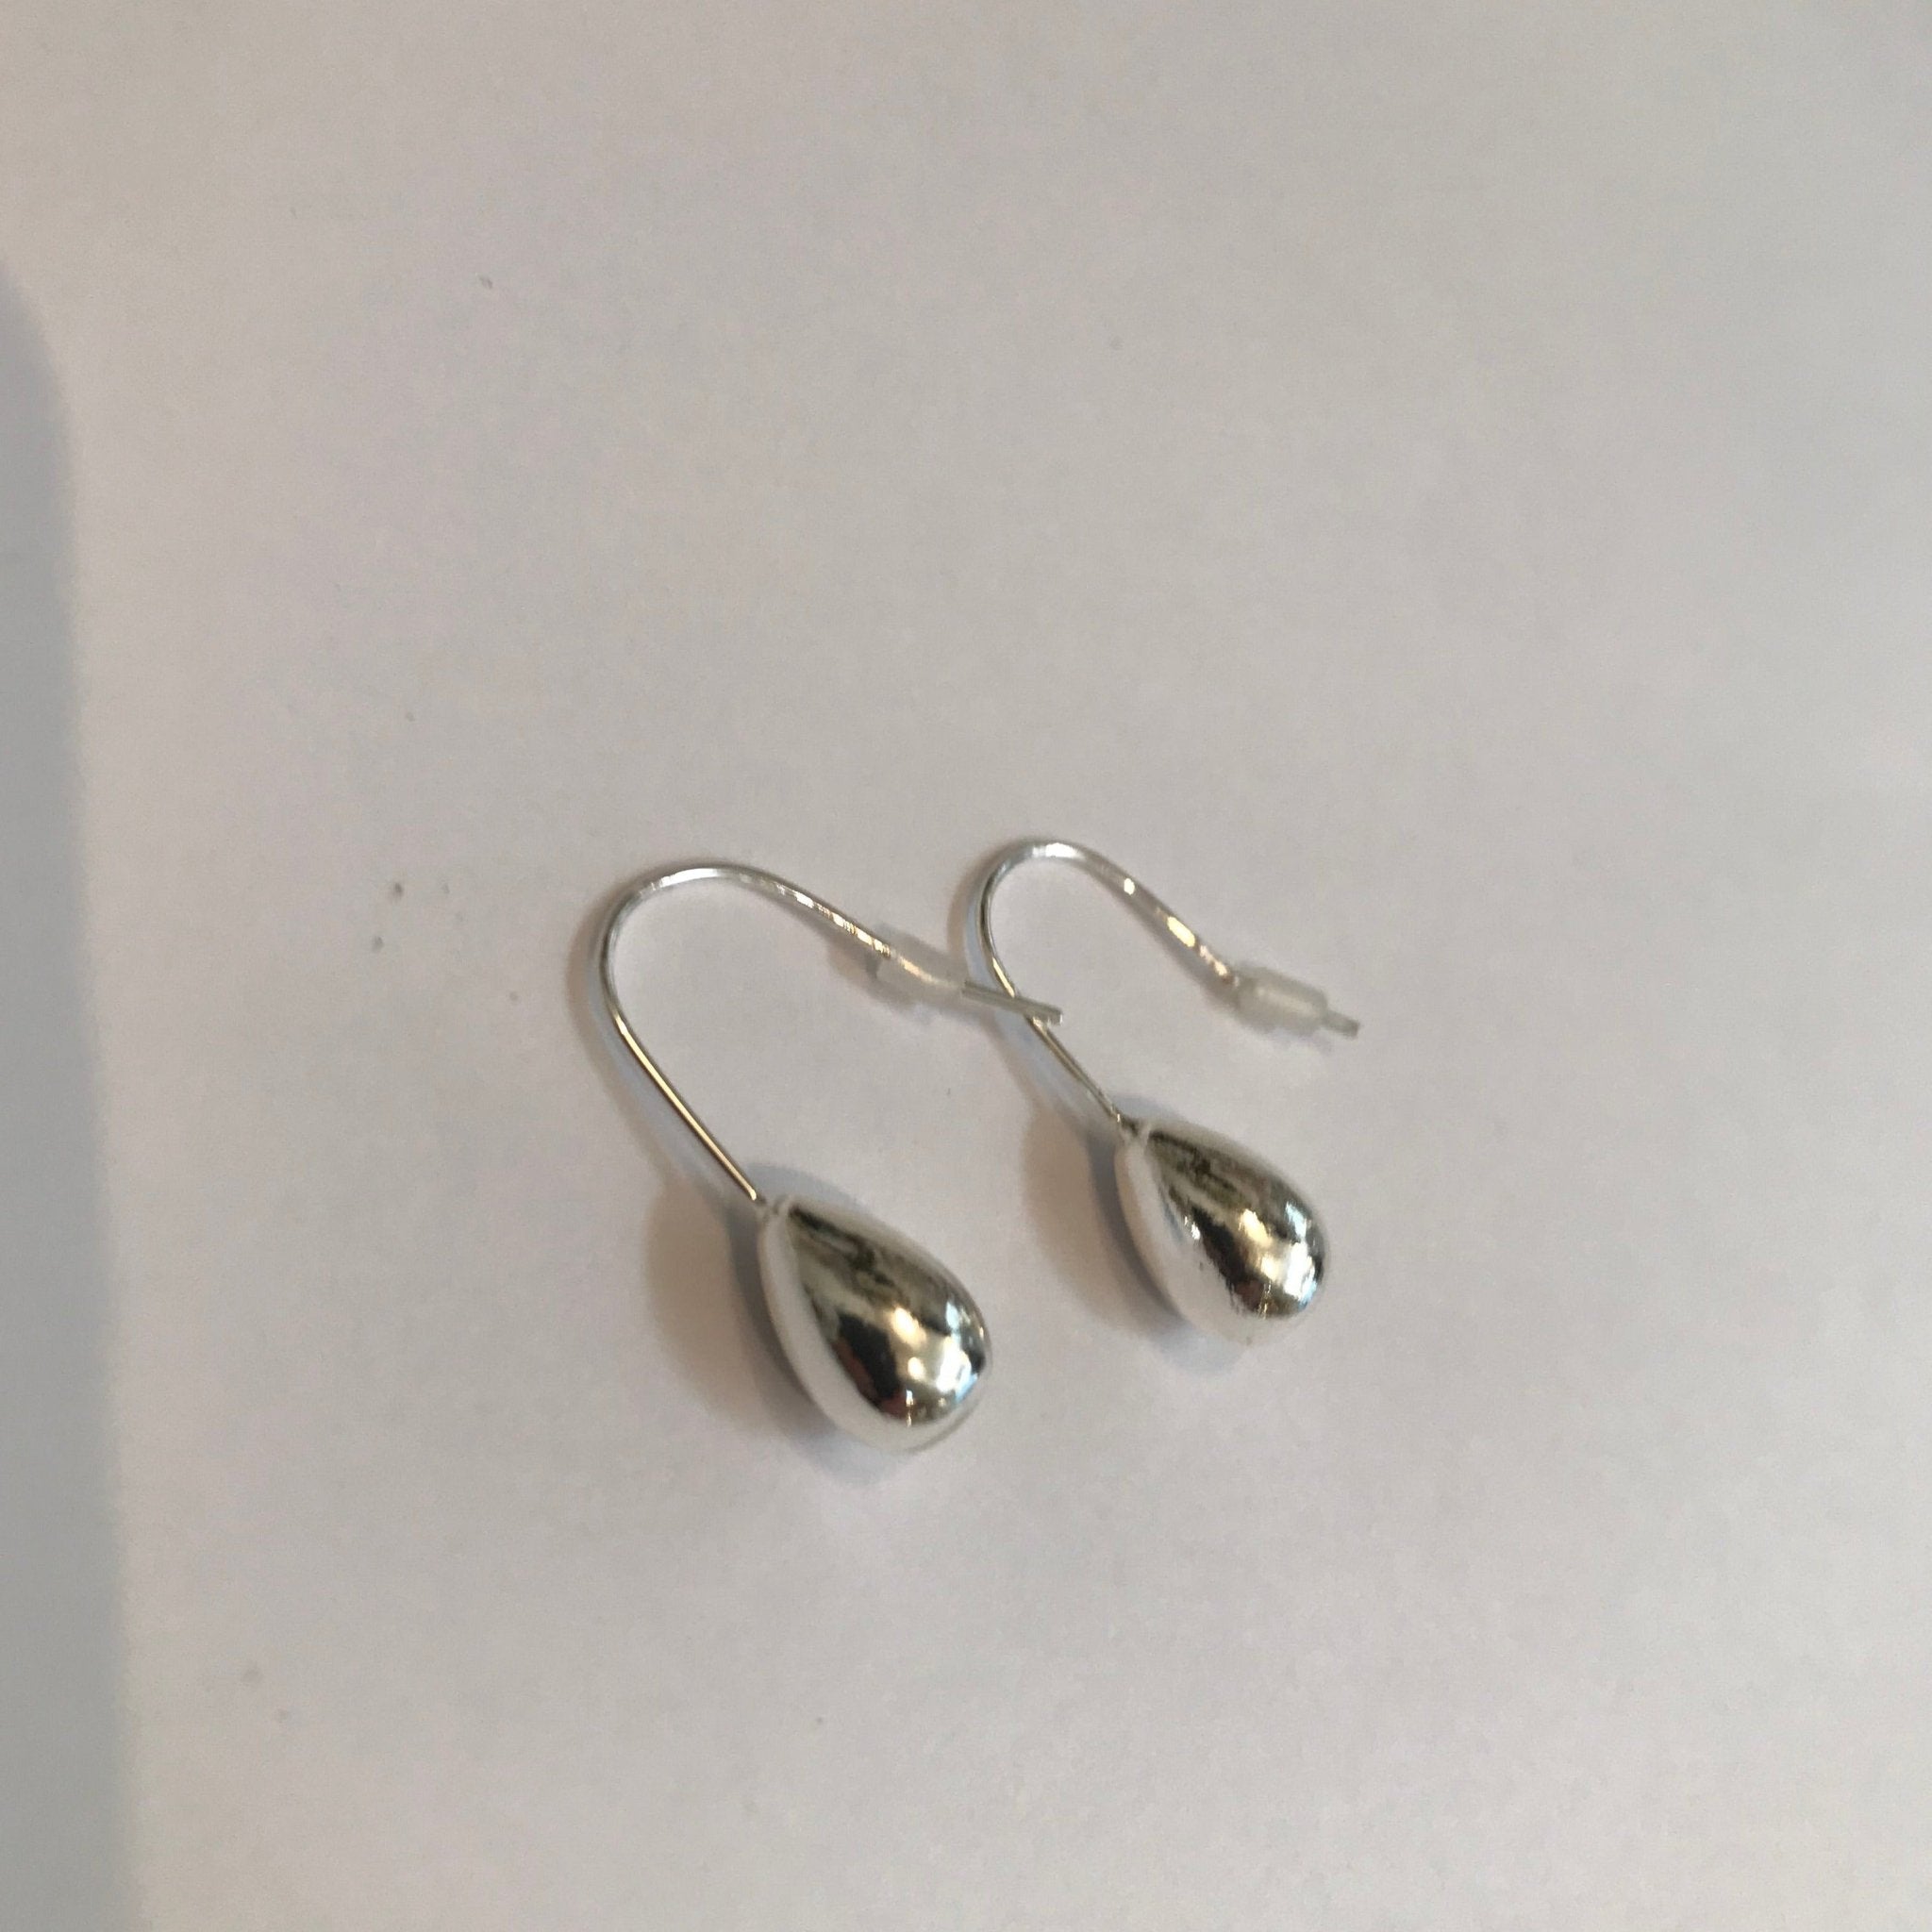 Silver Salome Drop Earrings - The Nancy Smillie Shop - Art, Jewellery & Designer Gifts Glasgow